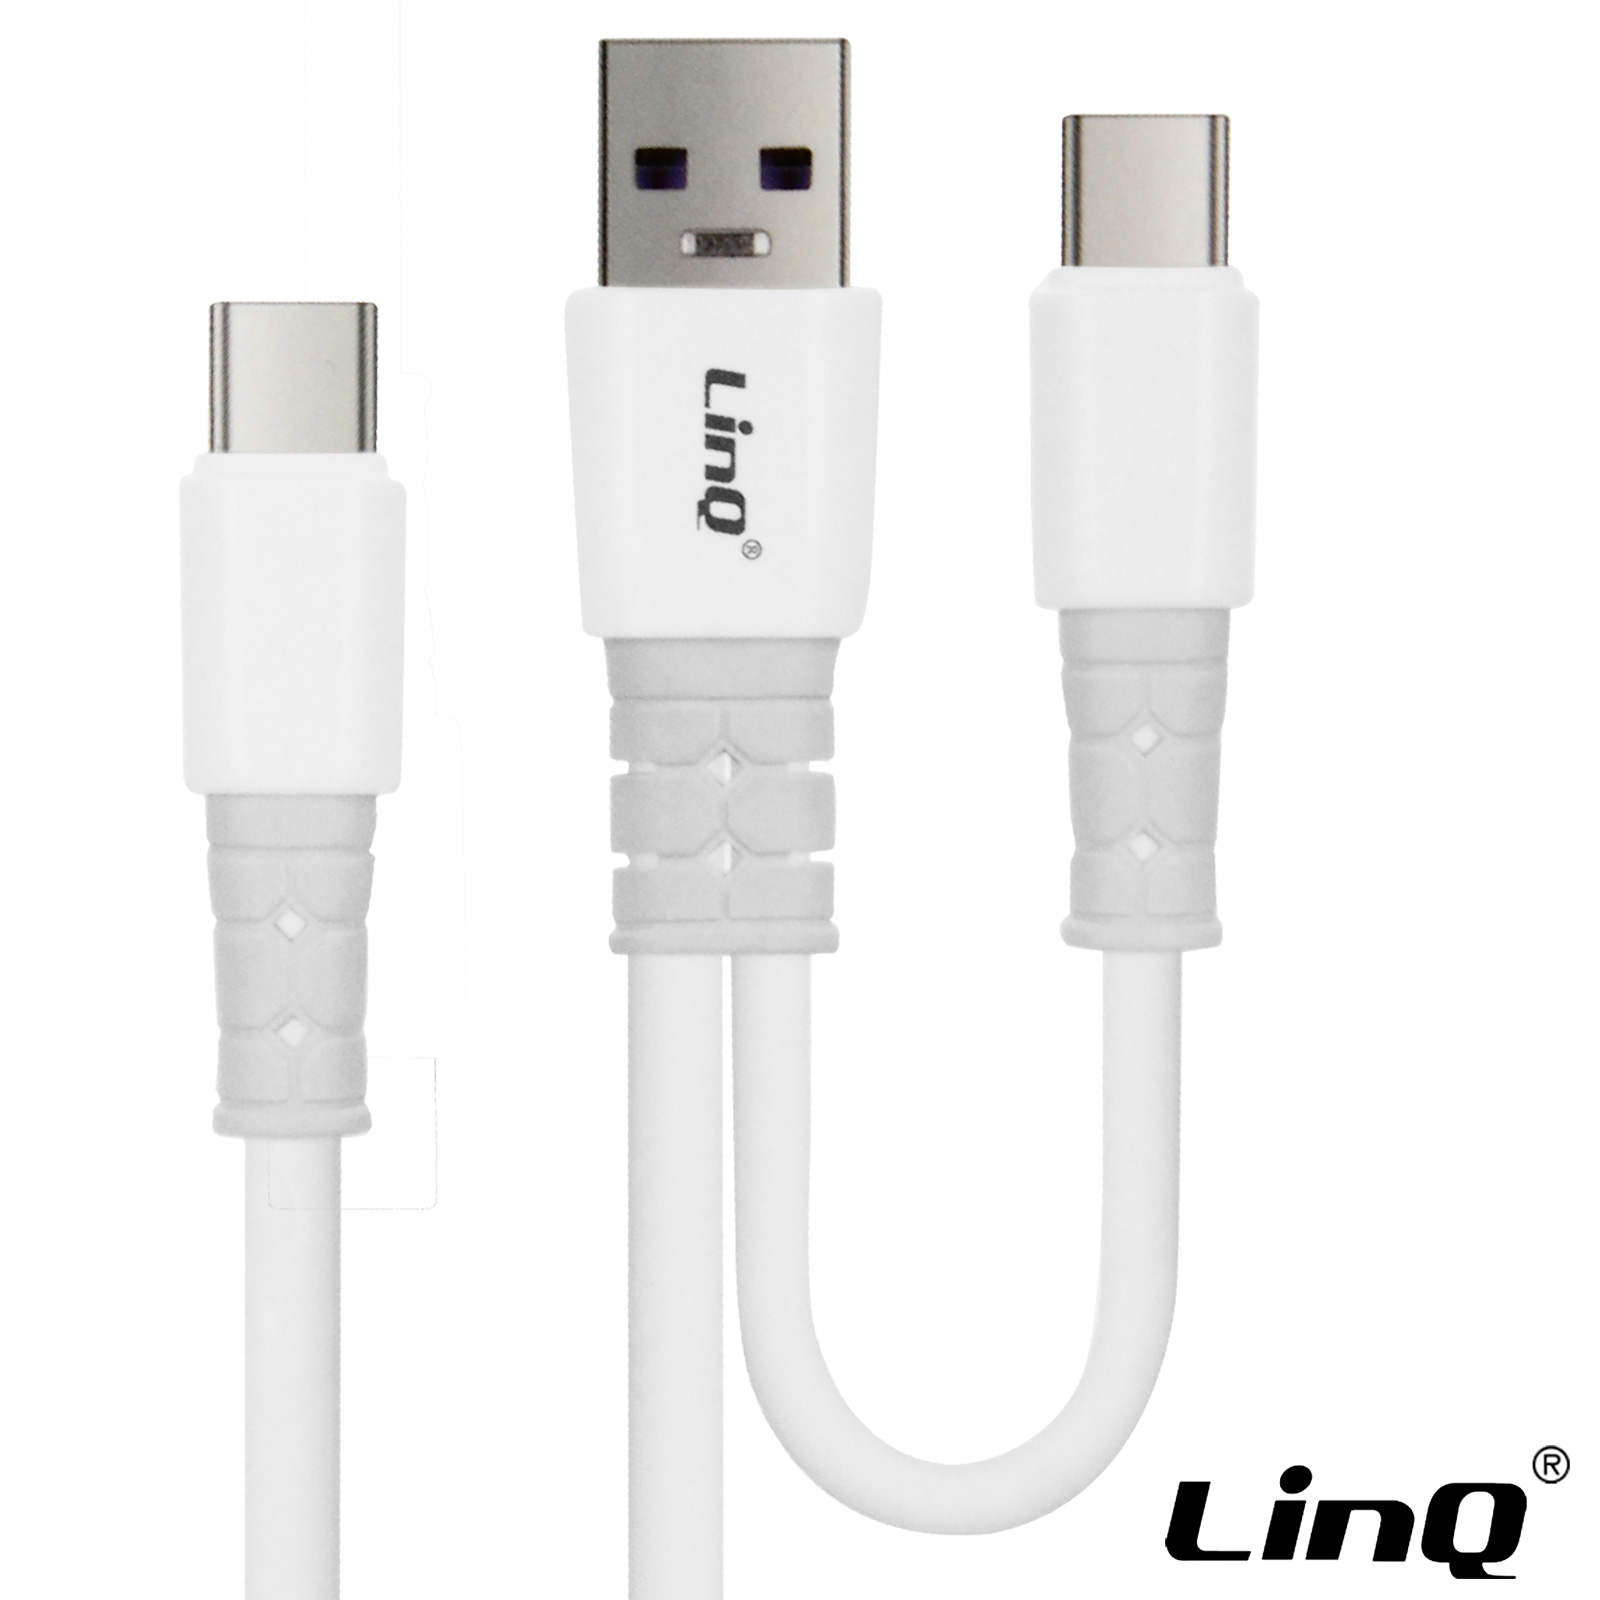 LogiLink PA0254 Base de Enchufe de Pared USB/USB-C Blanca